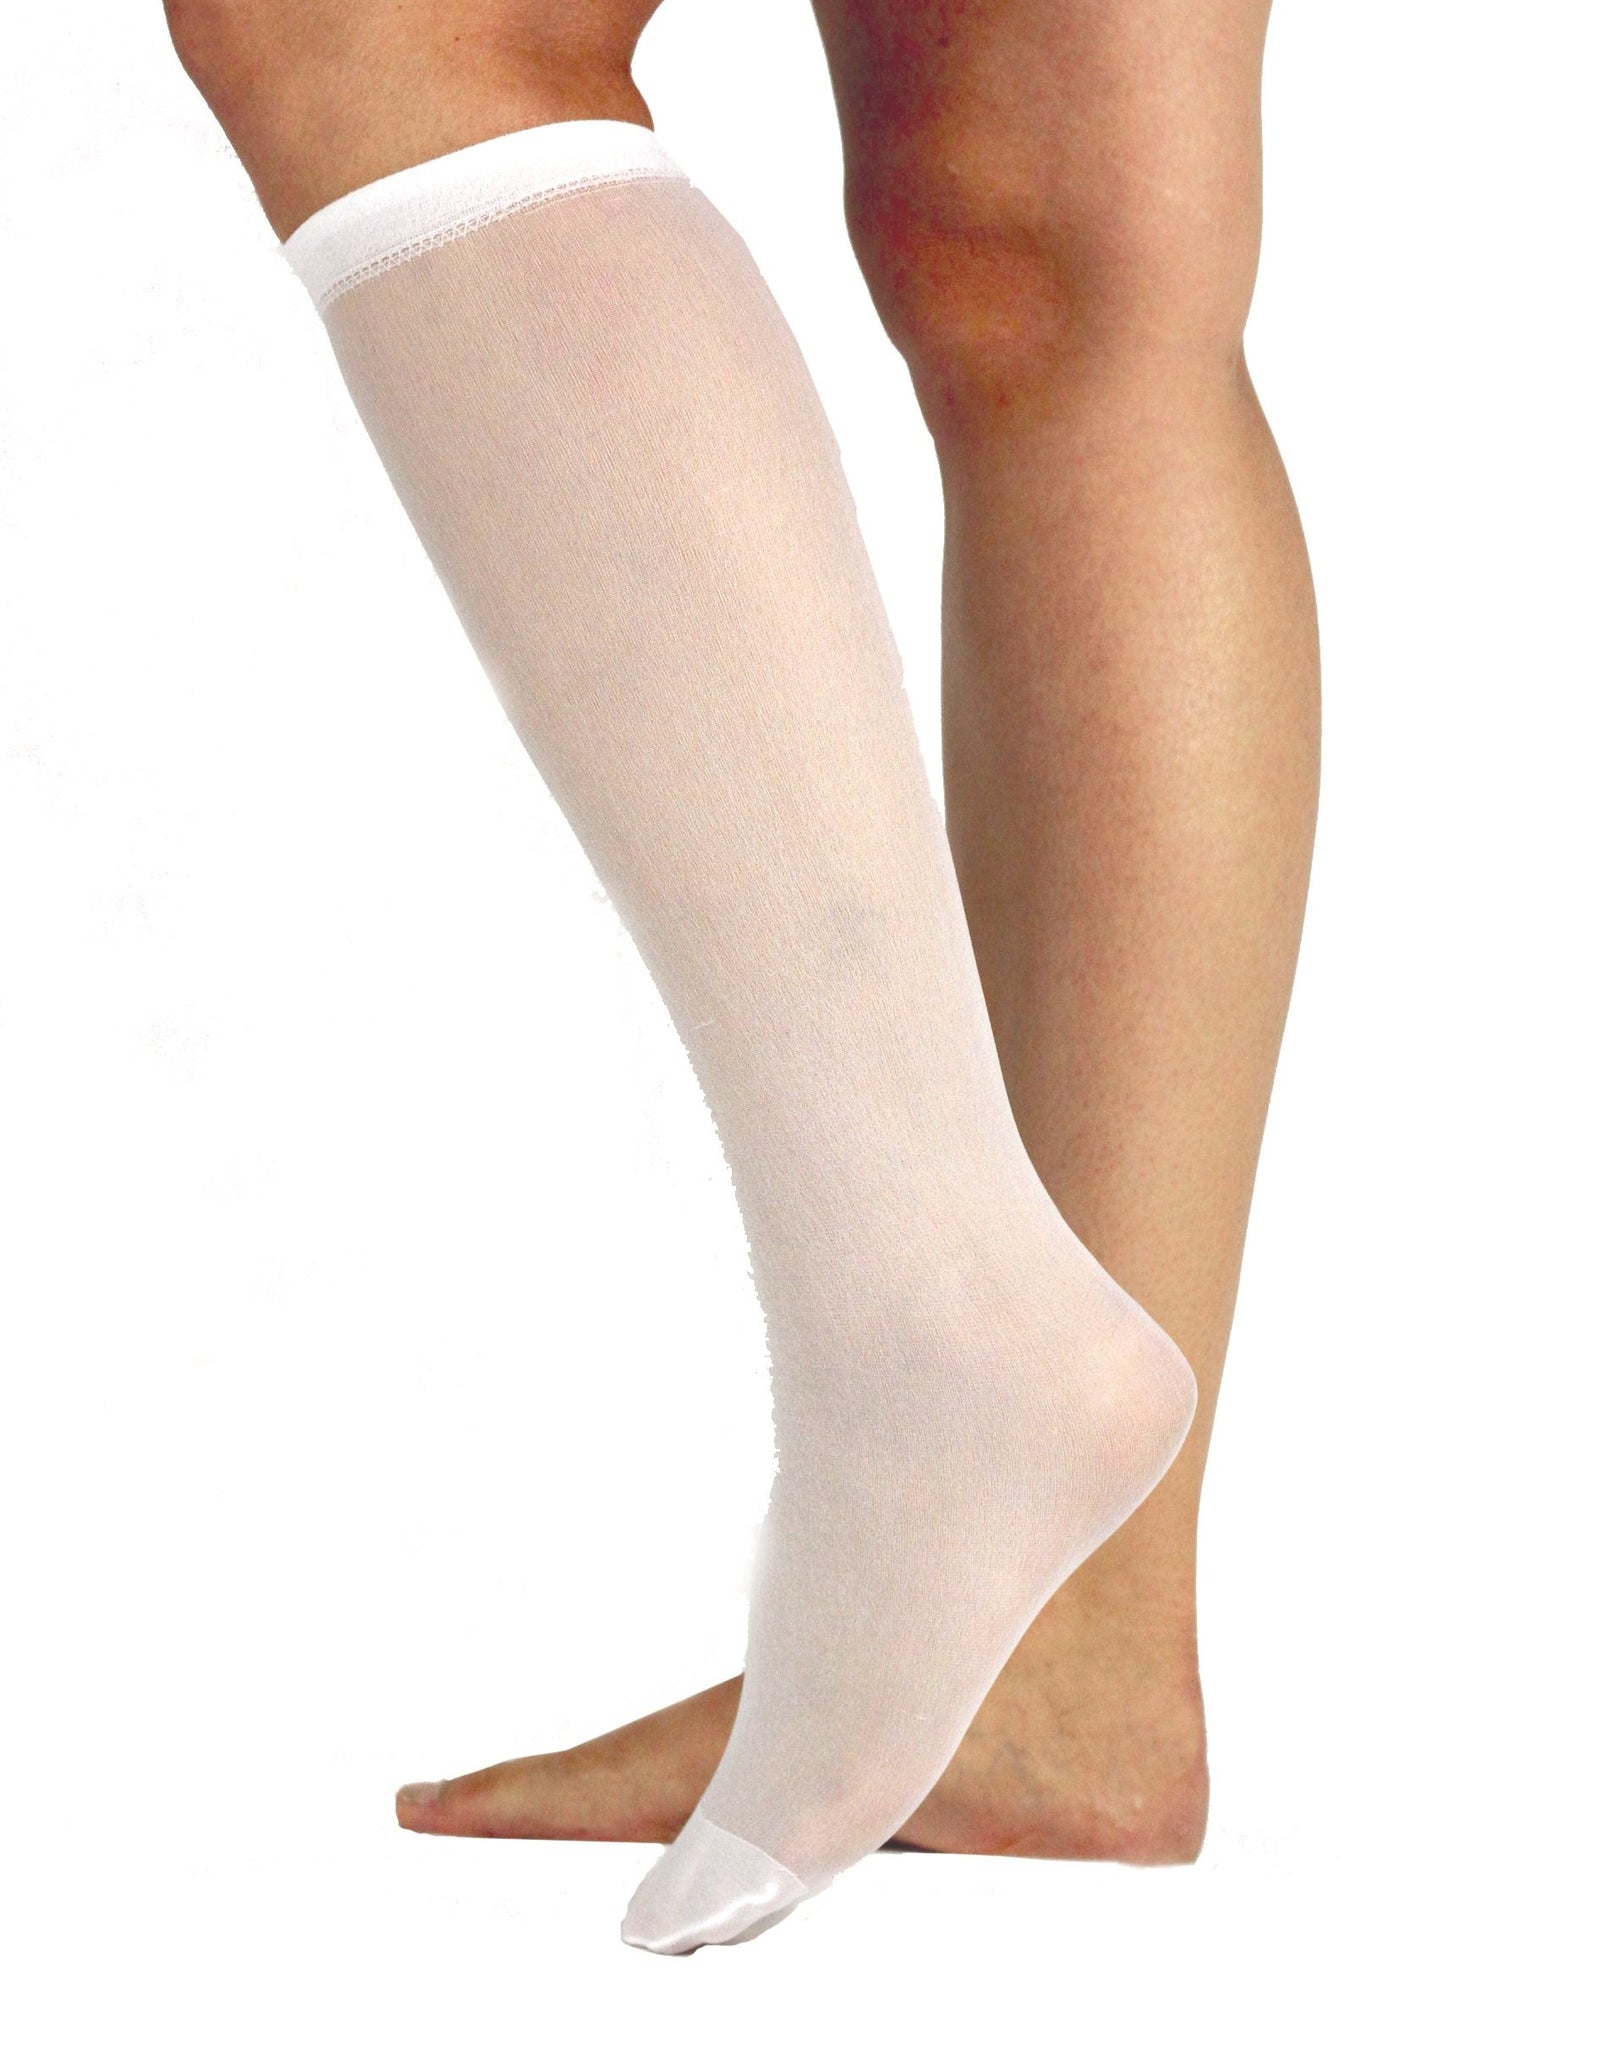 medi stocking liners calf